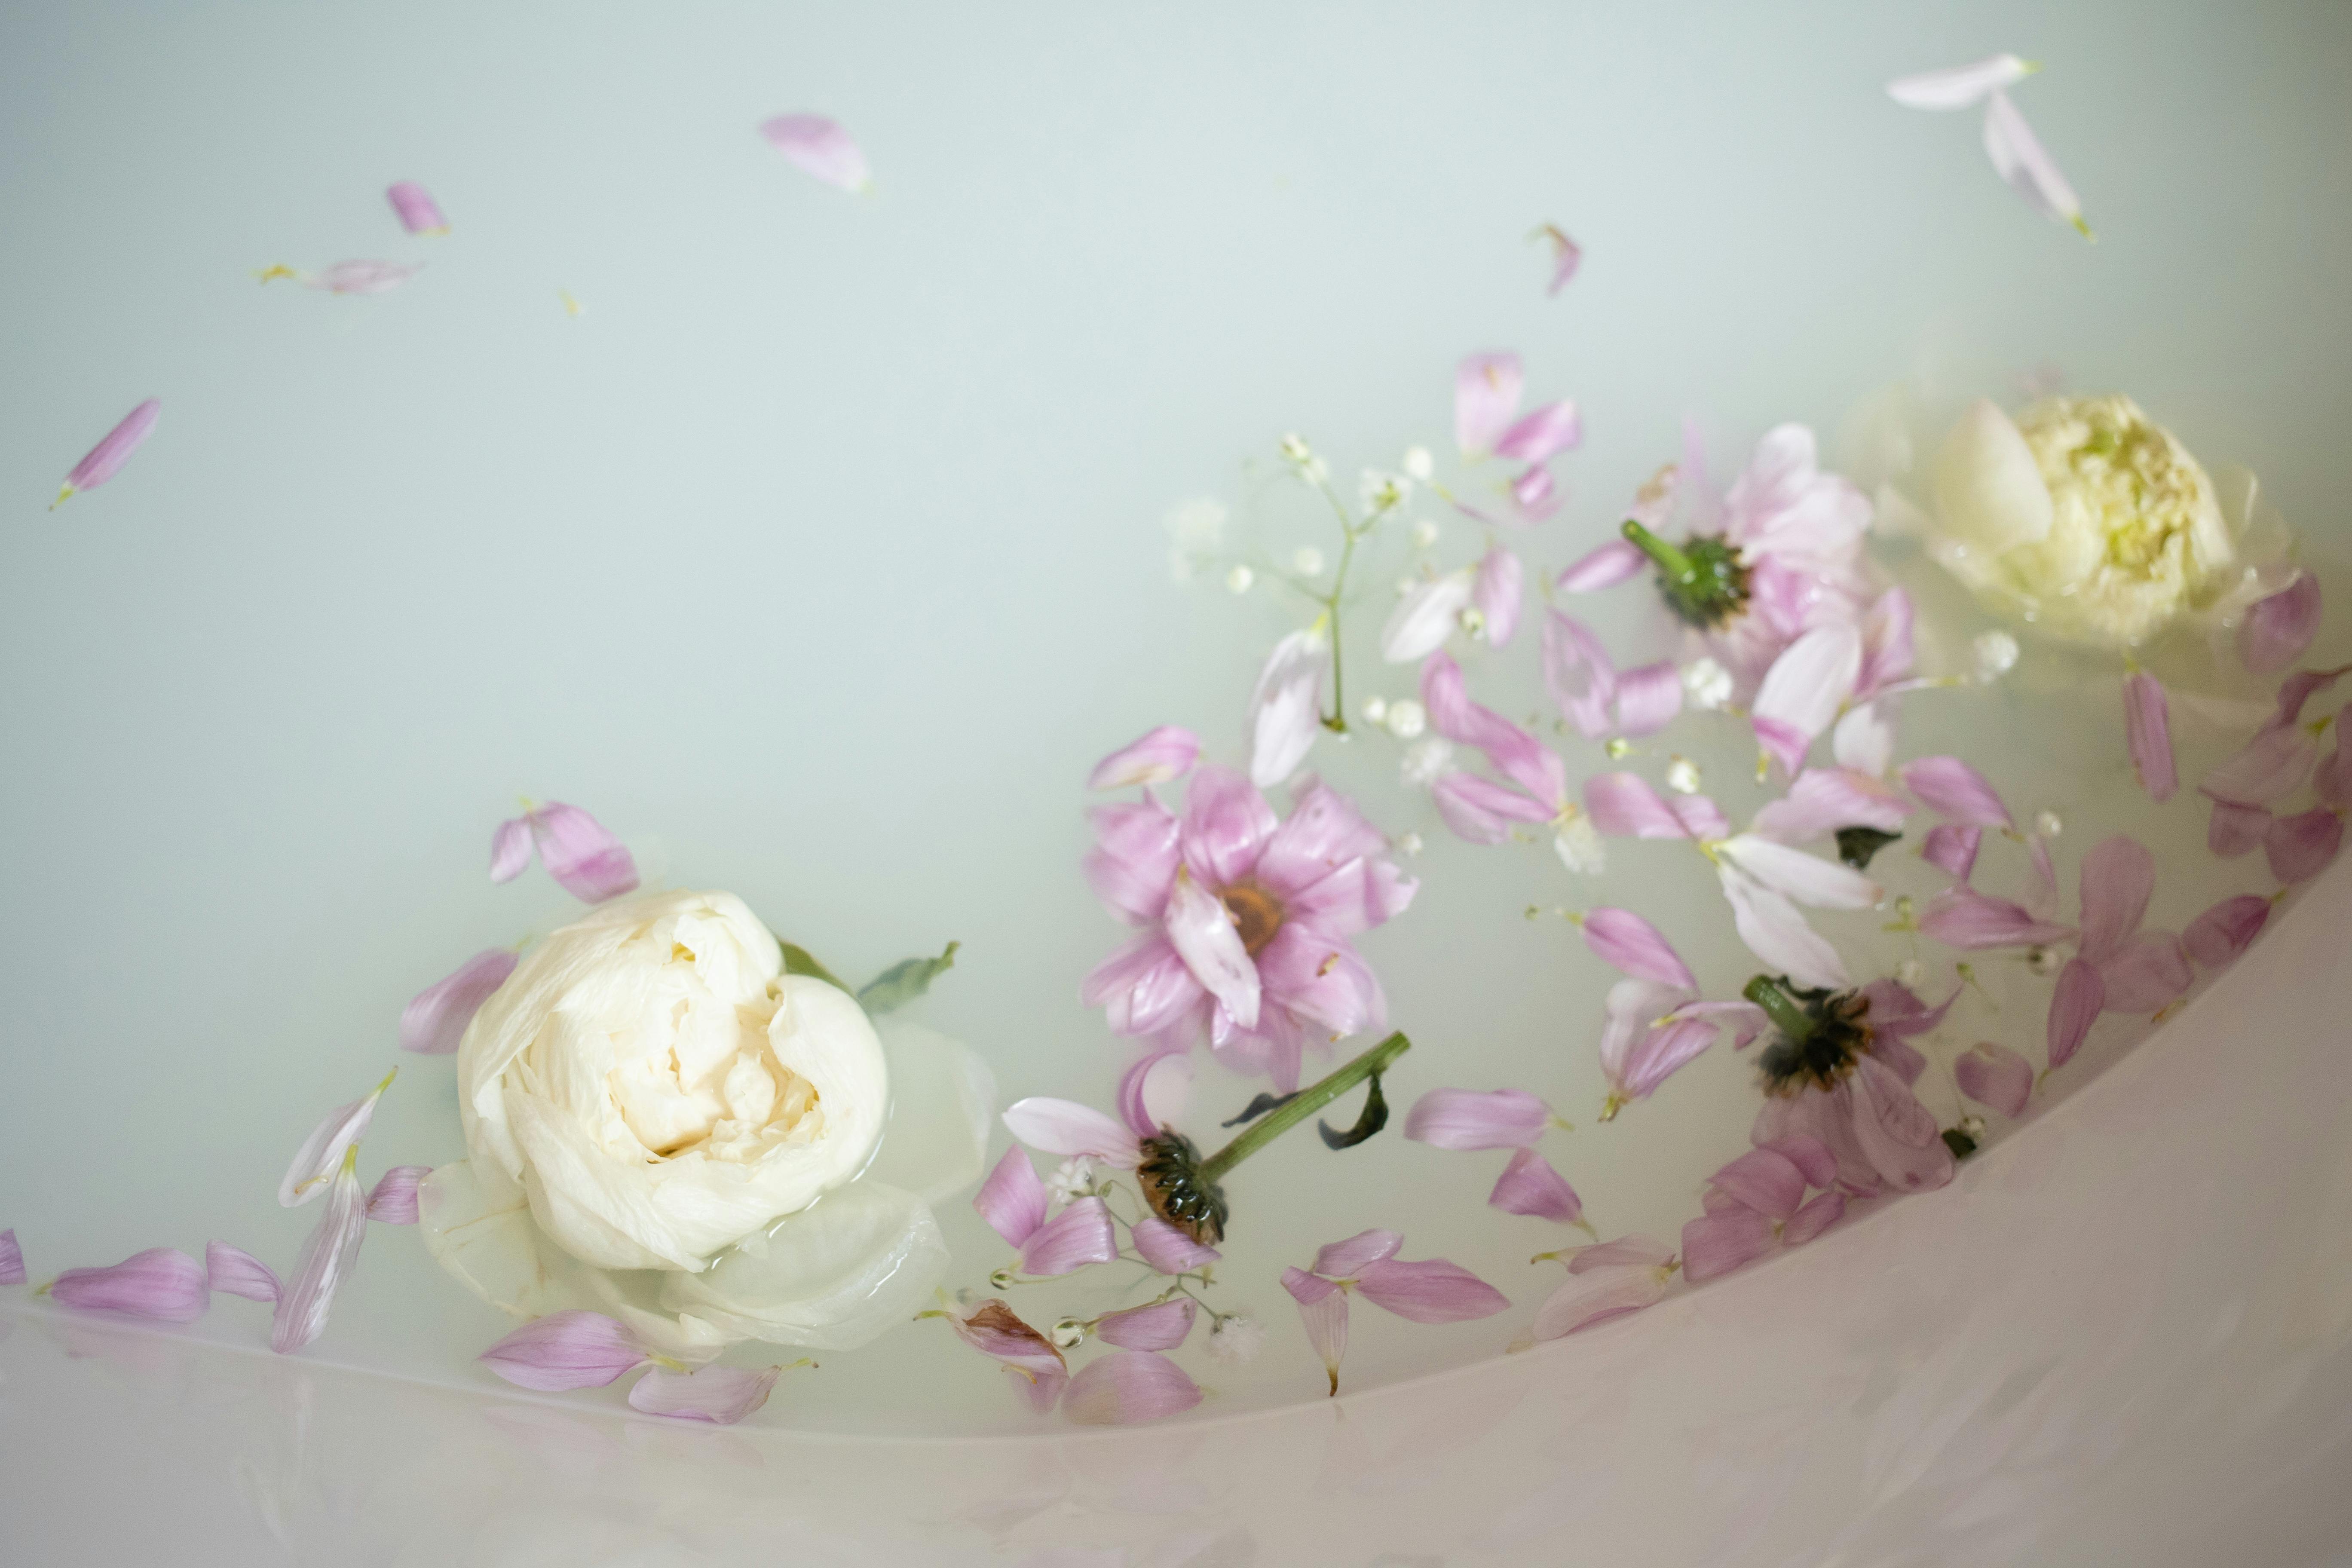 milk bath with flower petals in bathroom